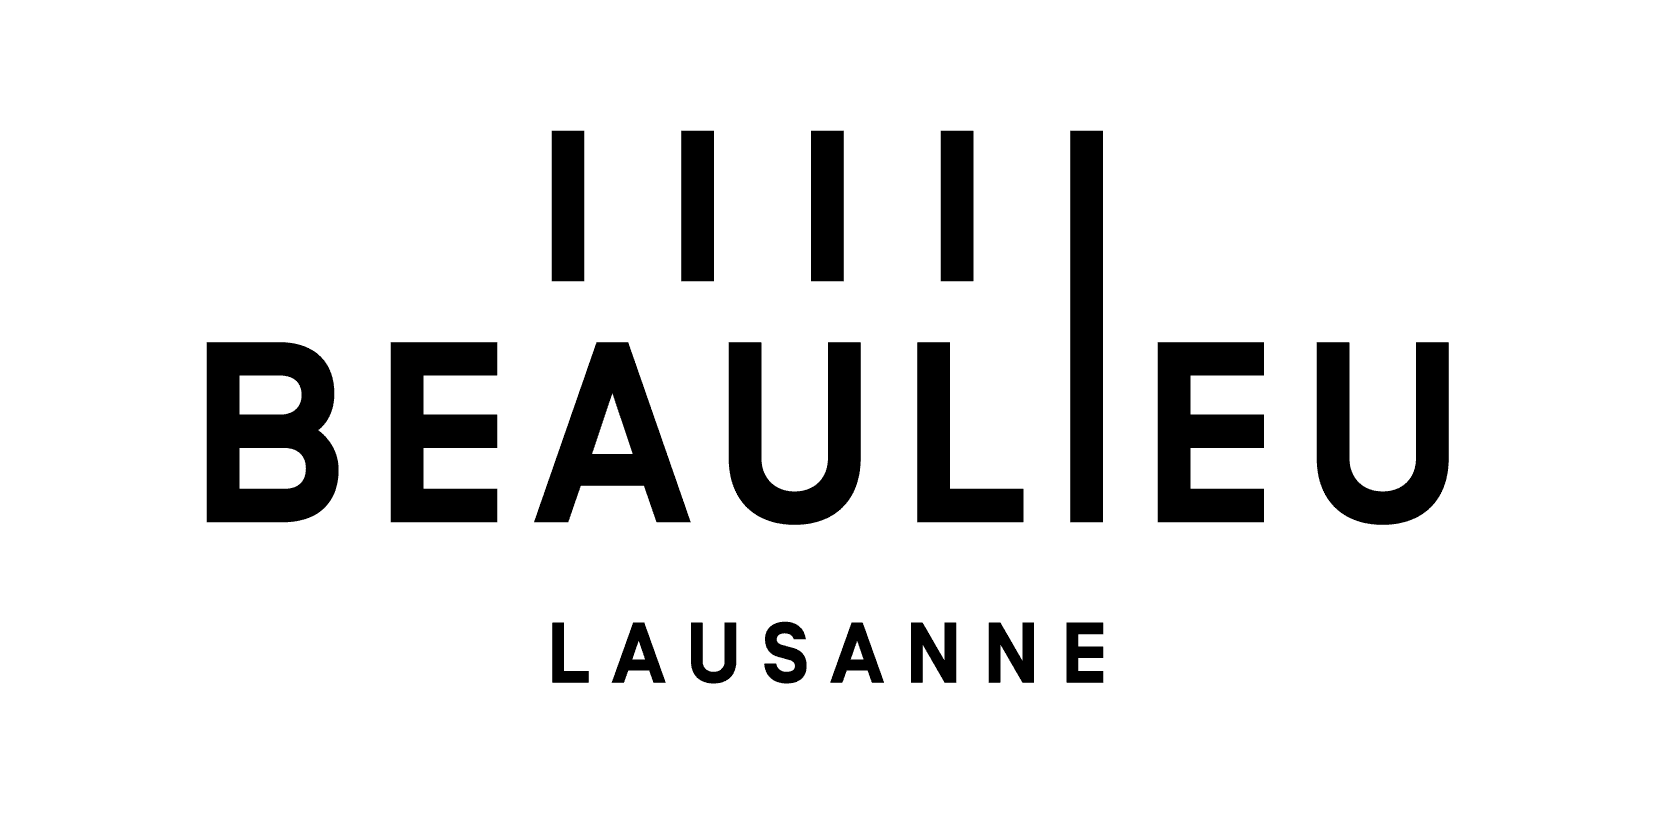 Logo of the Beaulieu Convention Center Lausanne